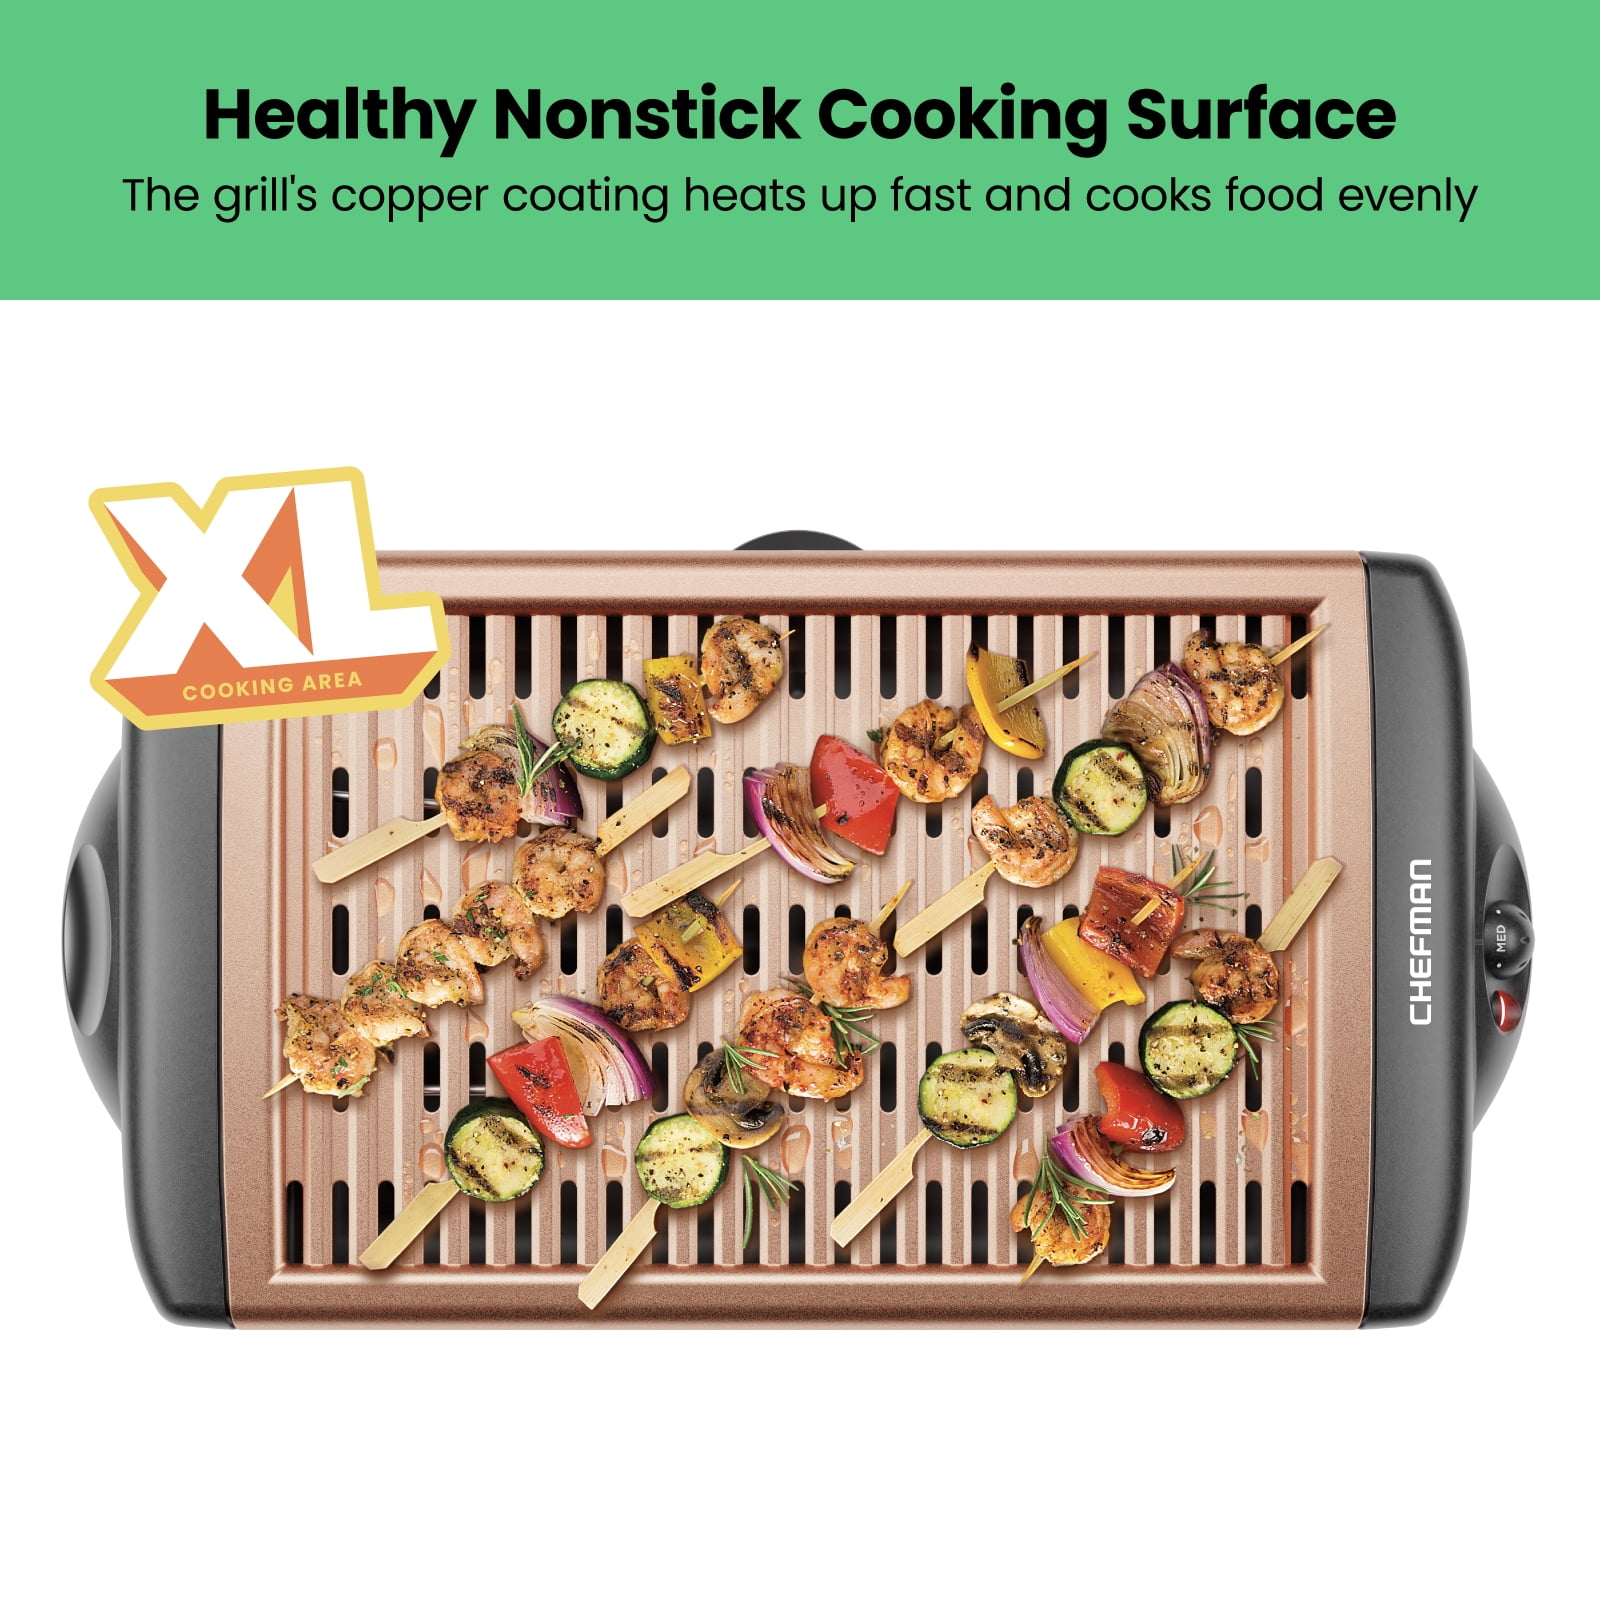 Chefman Smokeless Indoor Electric Grill, Adjustable Temperature Control, Dishwasher-Safe Parts